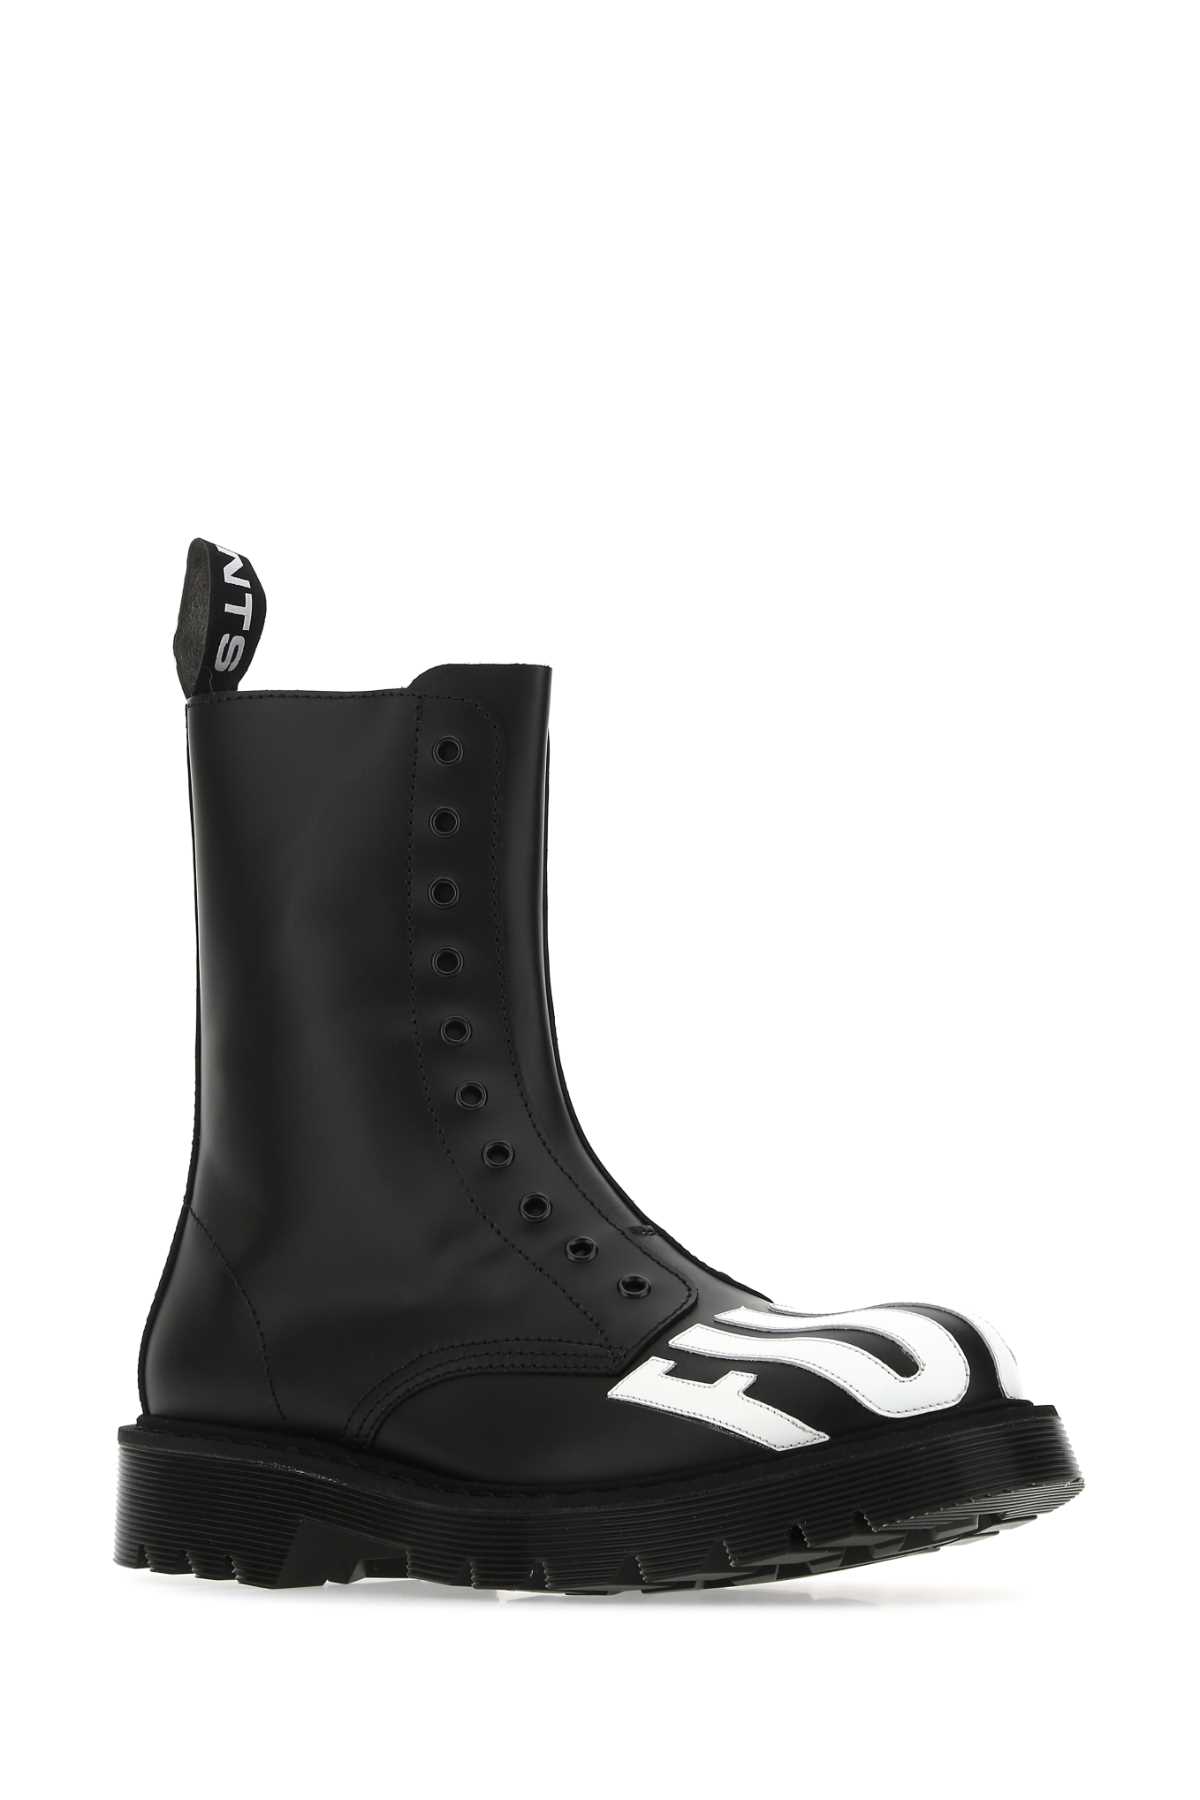 Shop Vtmnts Black Leather Ankle Boots